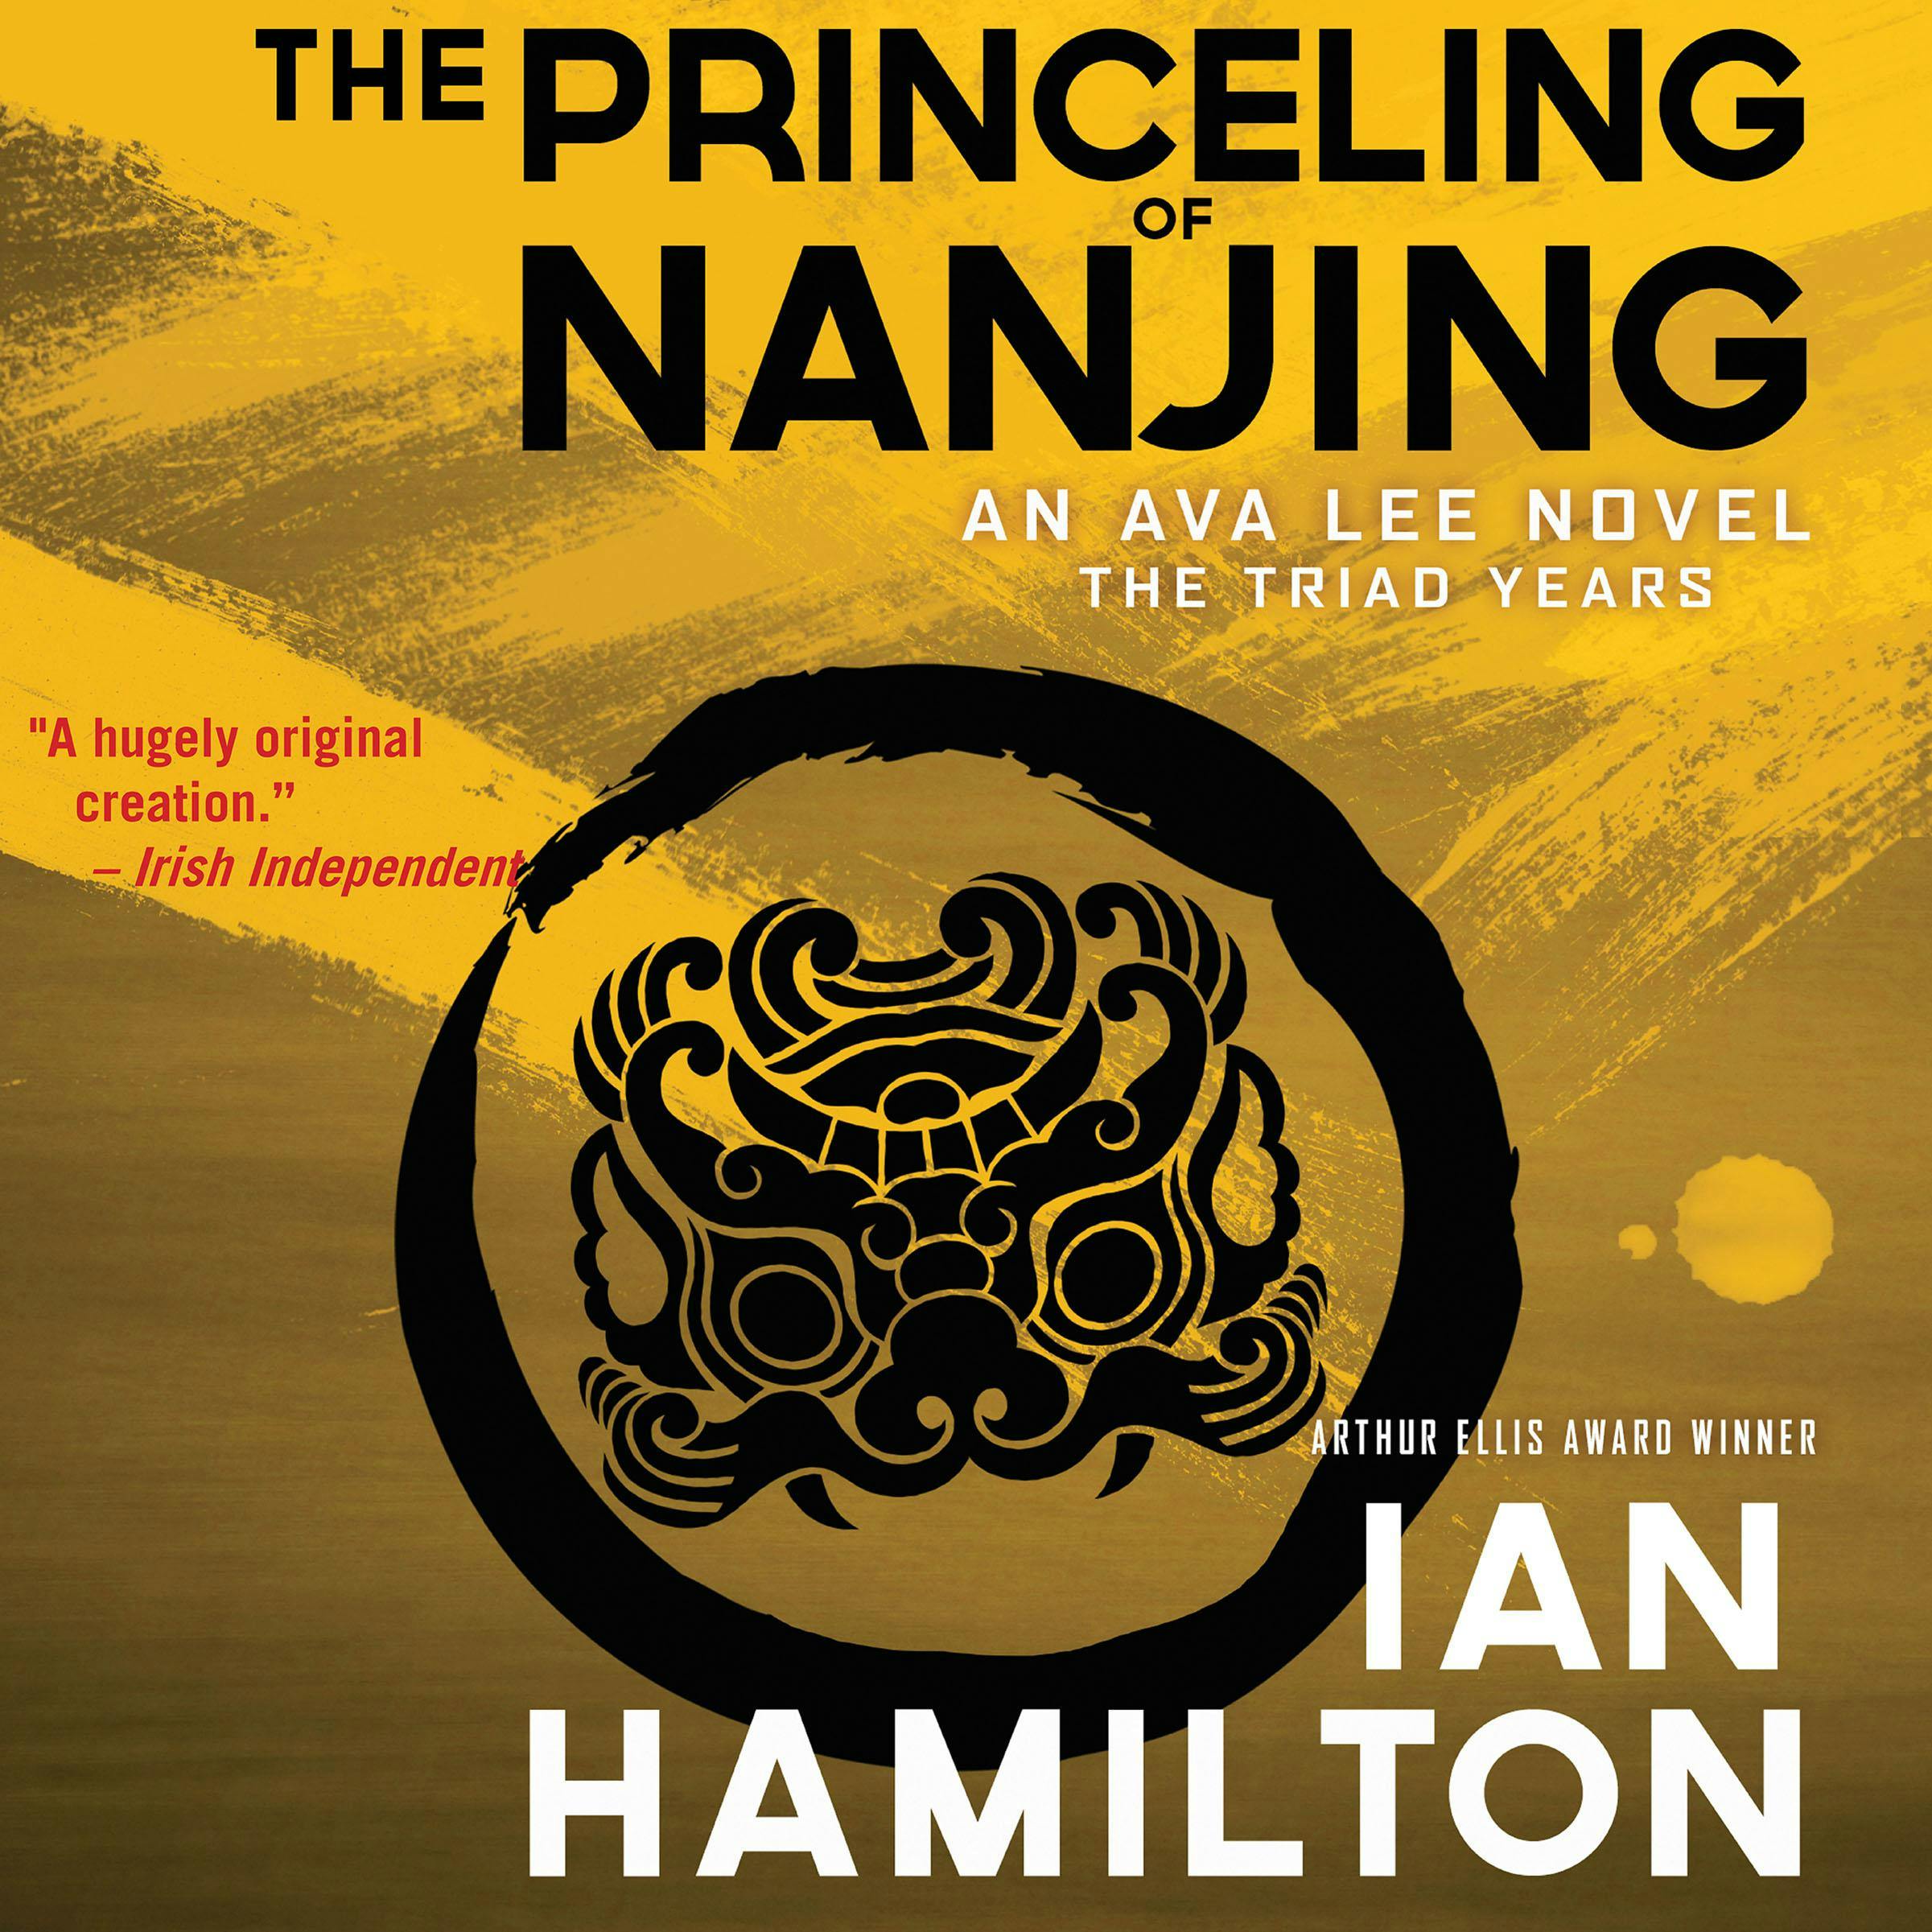 The Princeling of Nanjing: An Ava Lee Novel: The Triad Years - Ian Hamilton